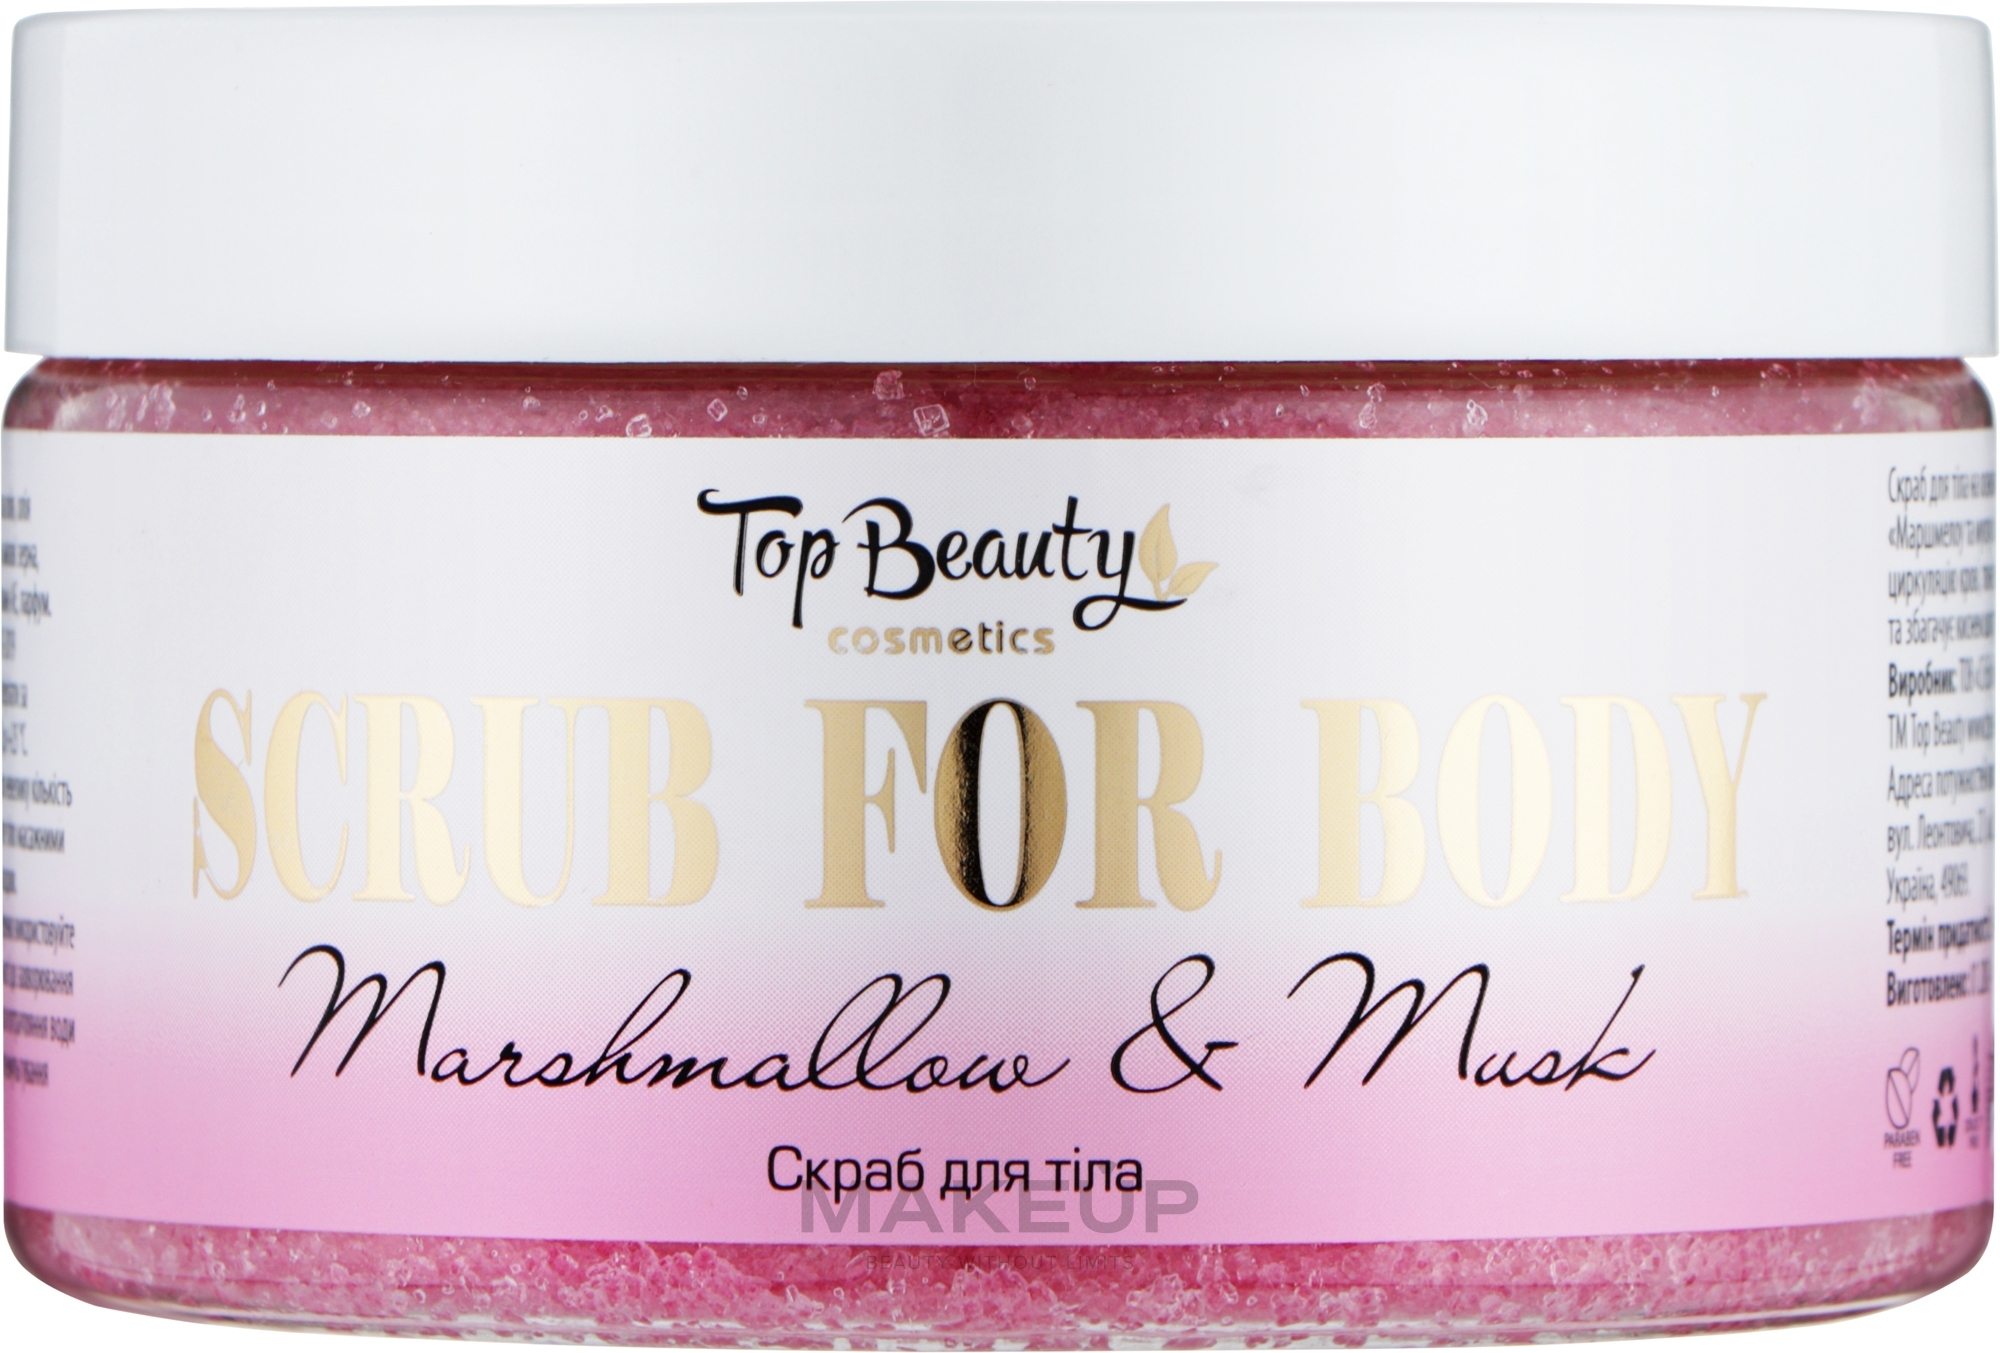 Скраб для тела и лица "Marshmallow & Musk" - Top Beauty Scrub — фото 250ml